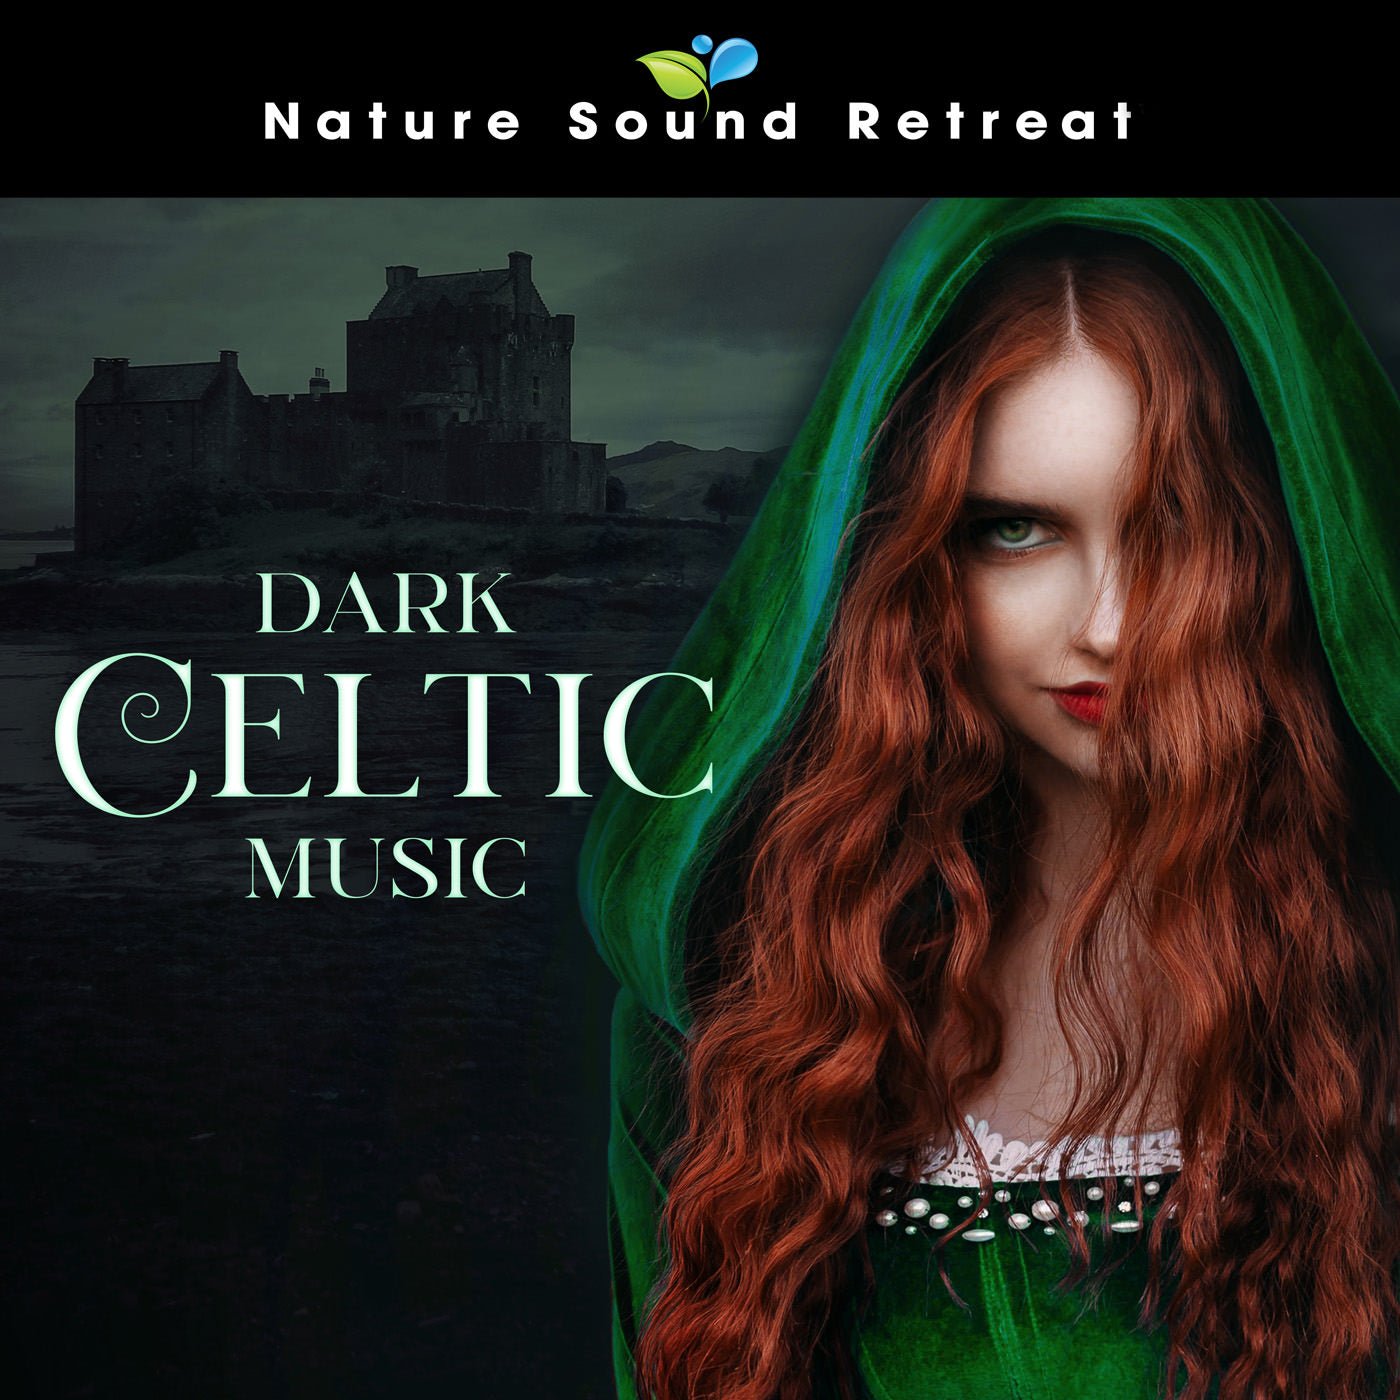 Dark Celtic Music - Nature Sound Retreat